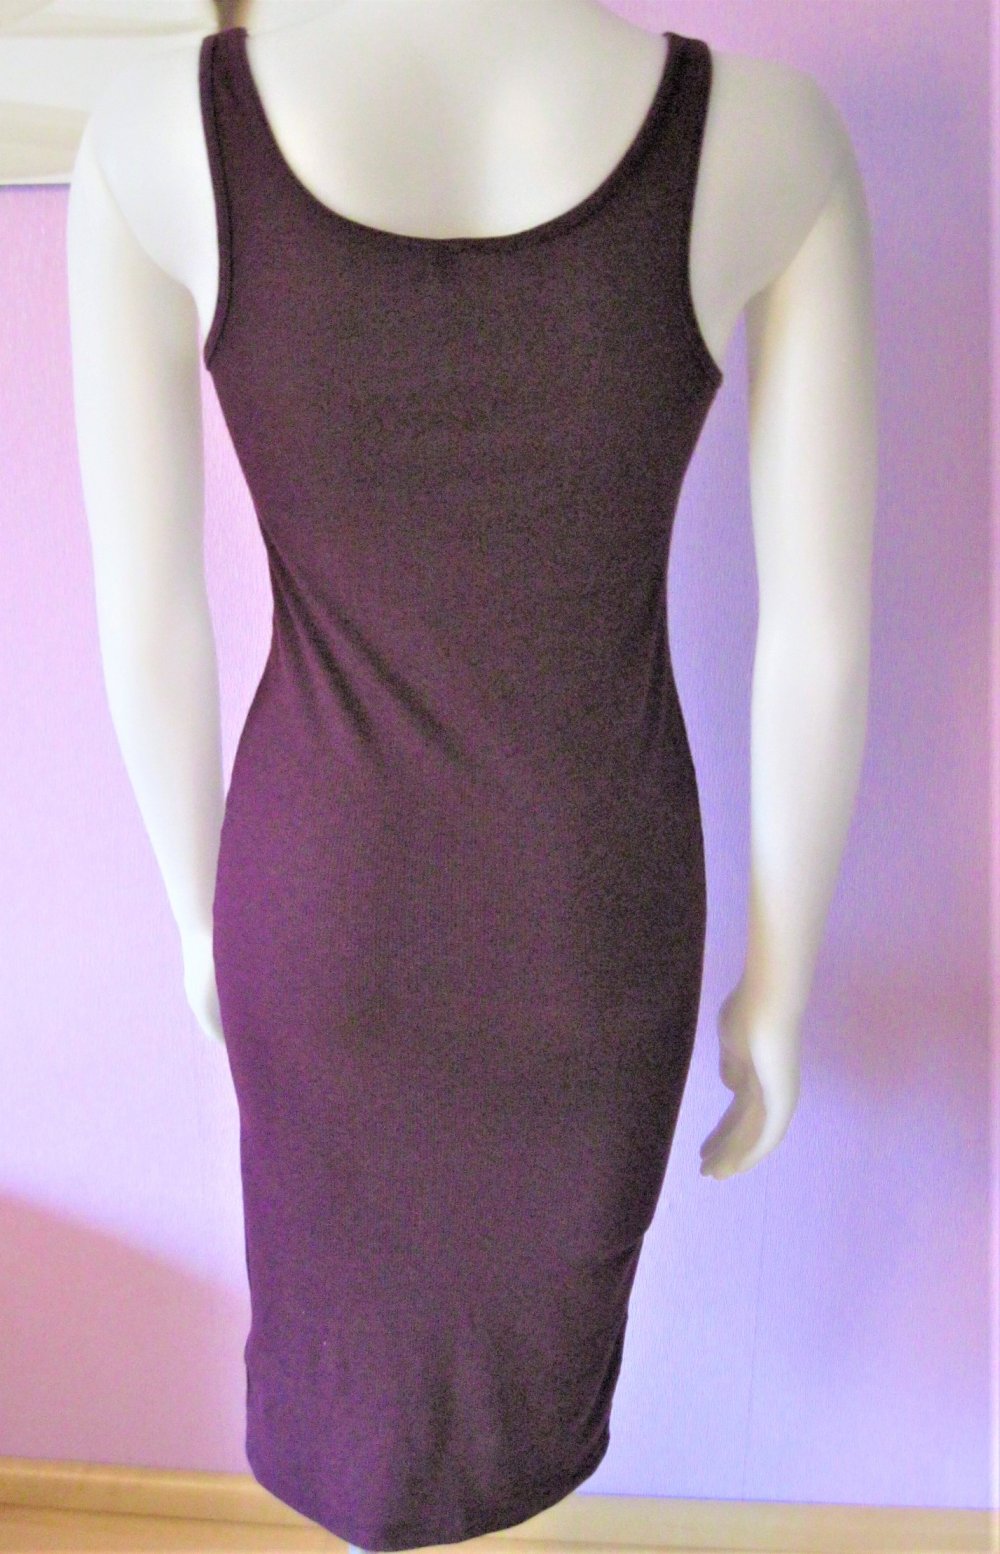 Sommerkleid # H&M # Violett # Trägerkleid # S